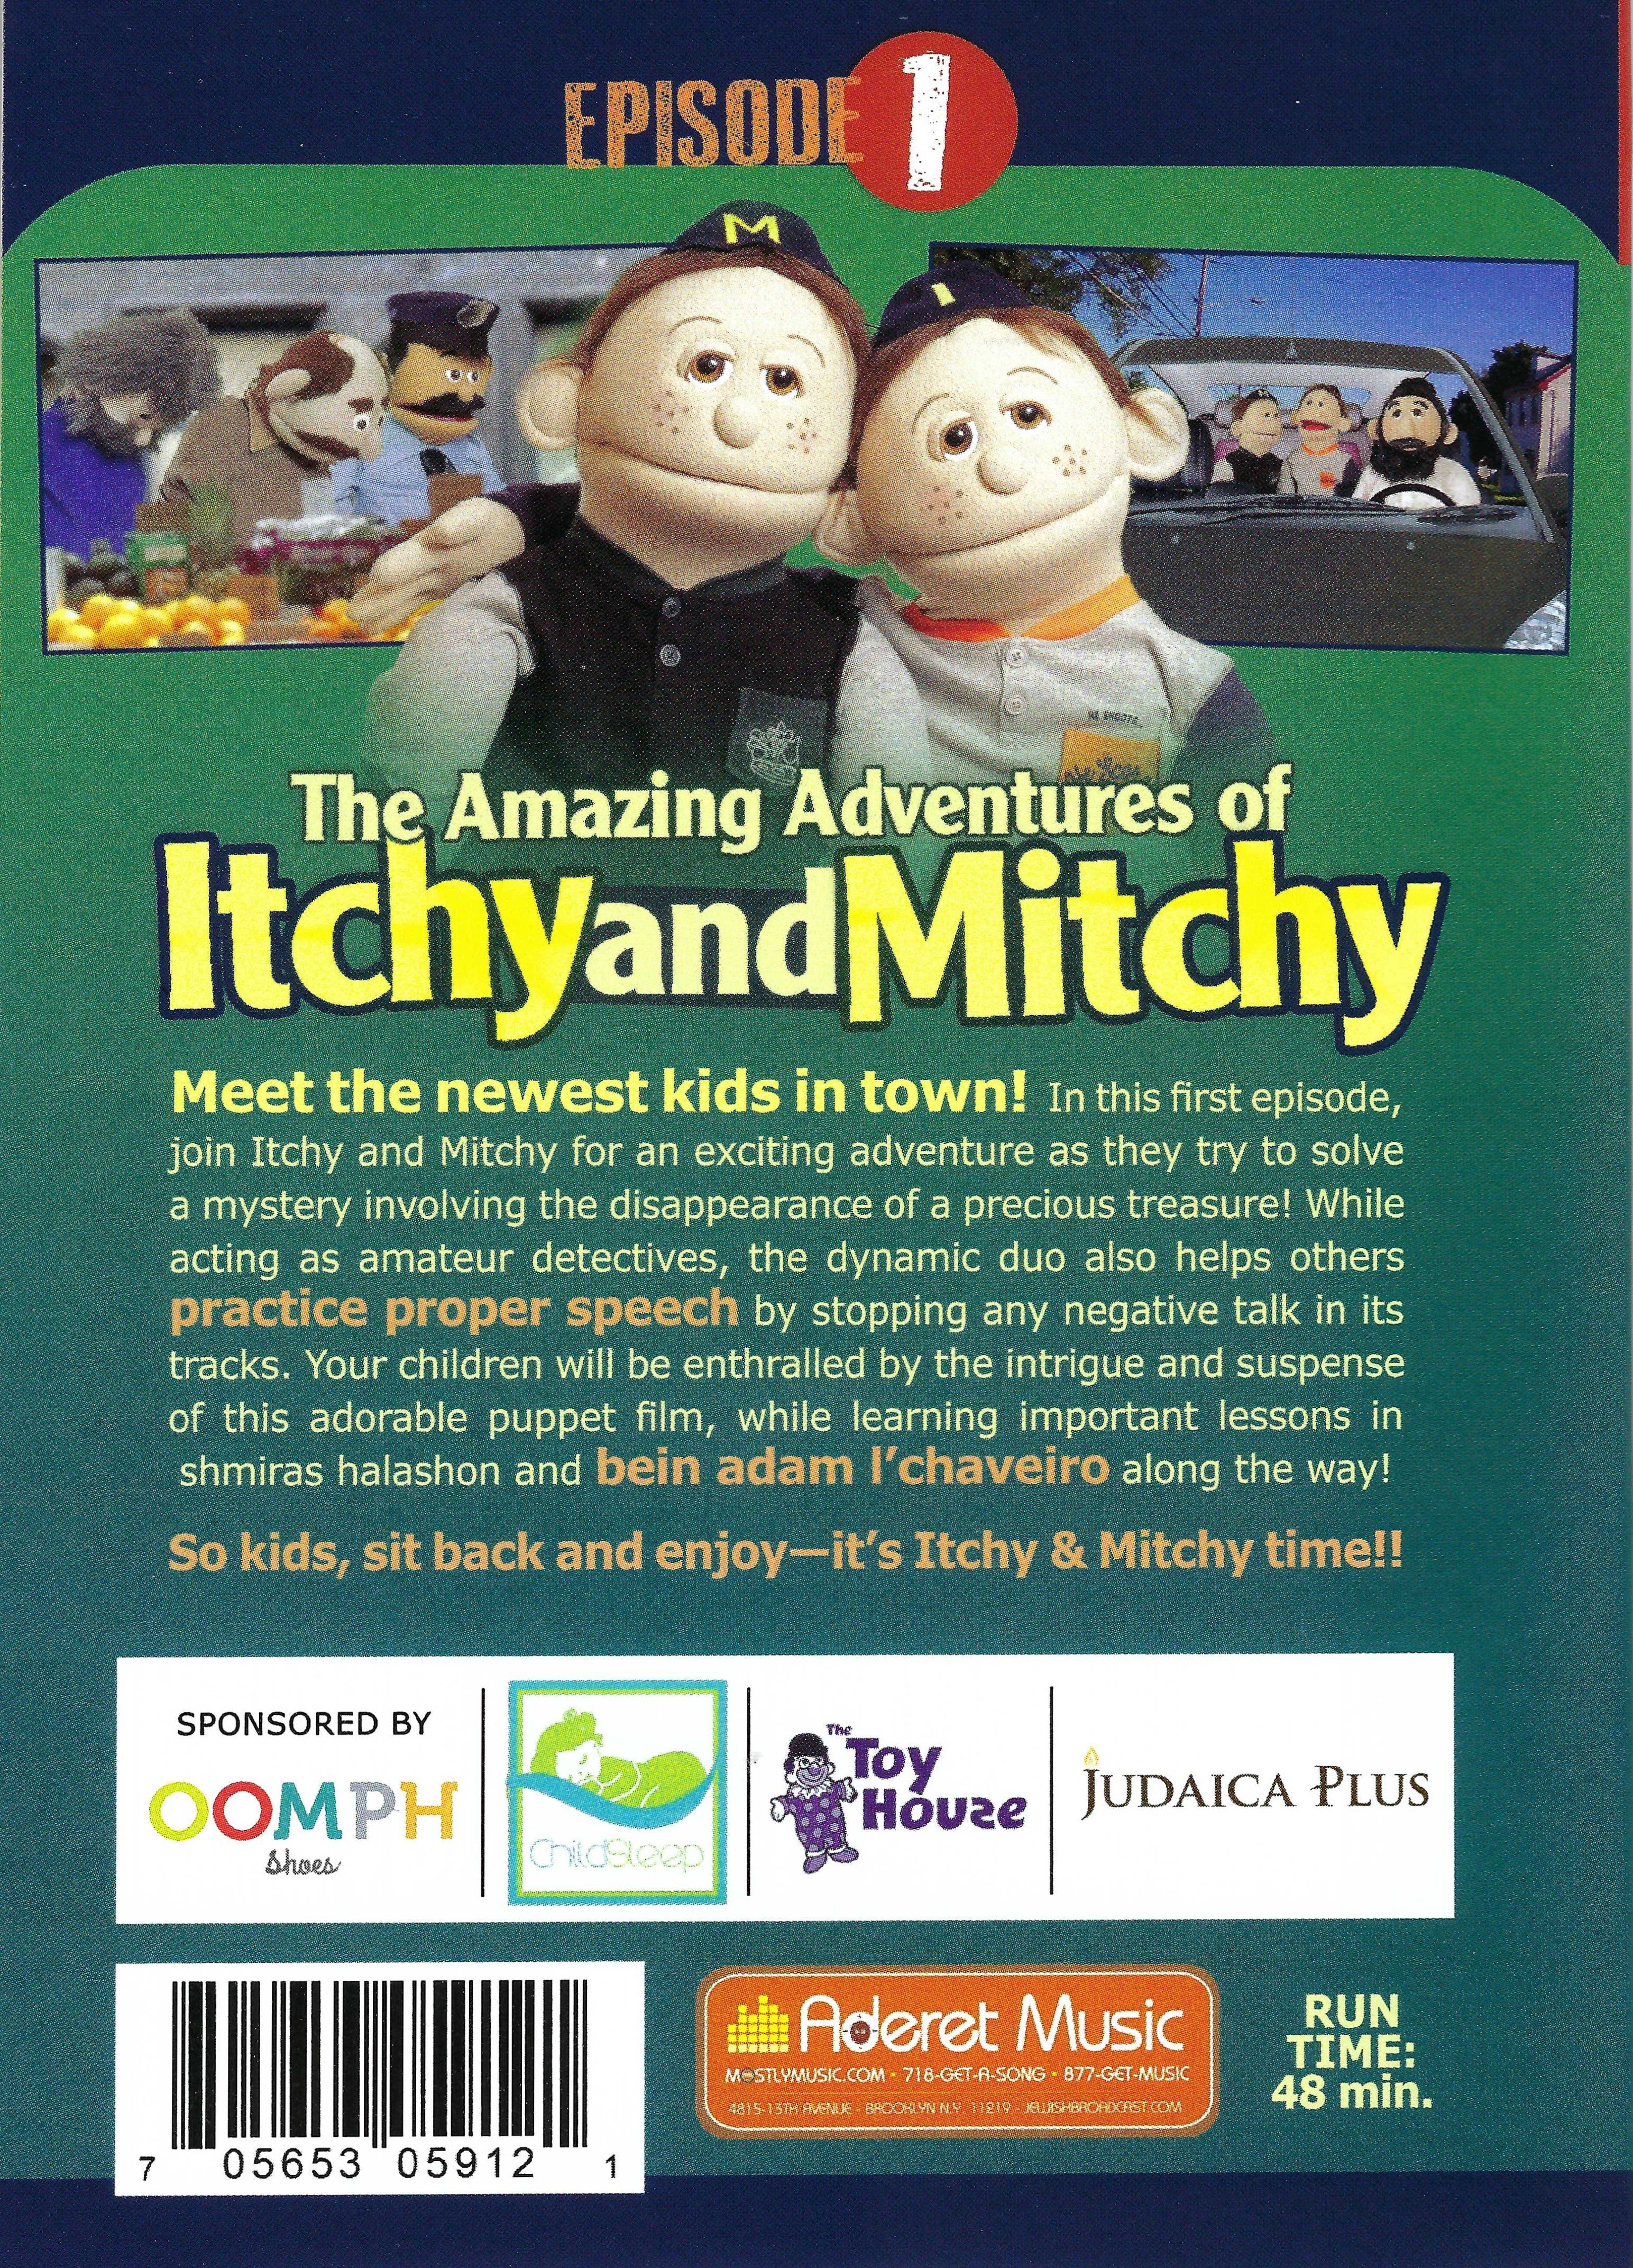 Chofetz Chaim Heritage Foundation - Itchy & Mitchy